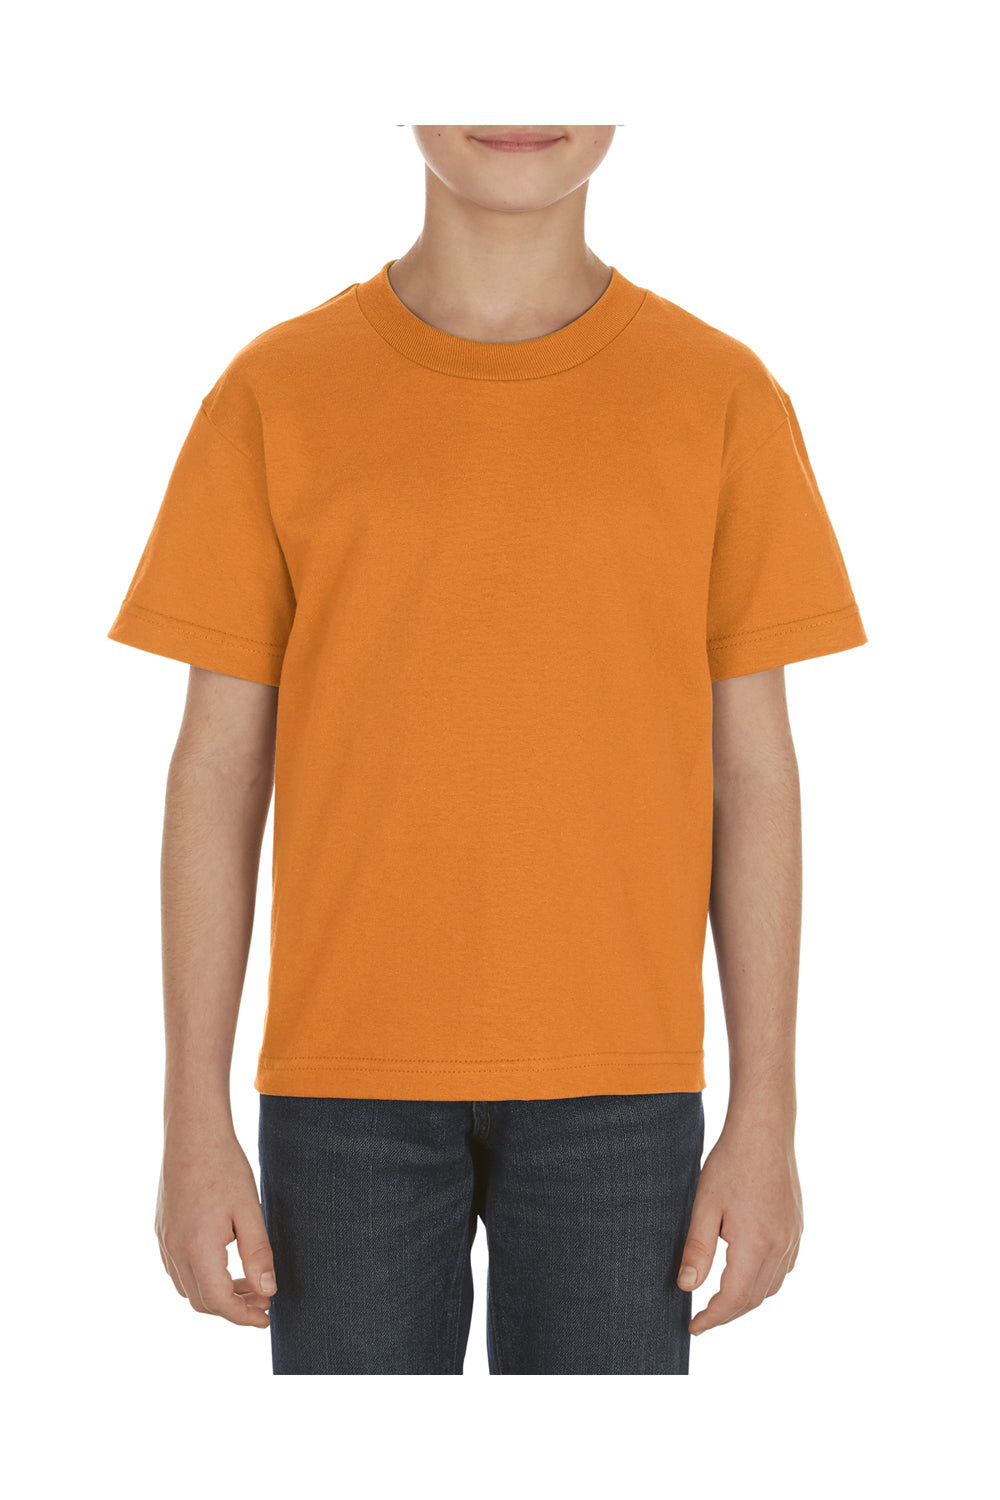 Alstyle AL3381 Youth Short Sleeve Crewneck T-Shirt Orange Front